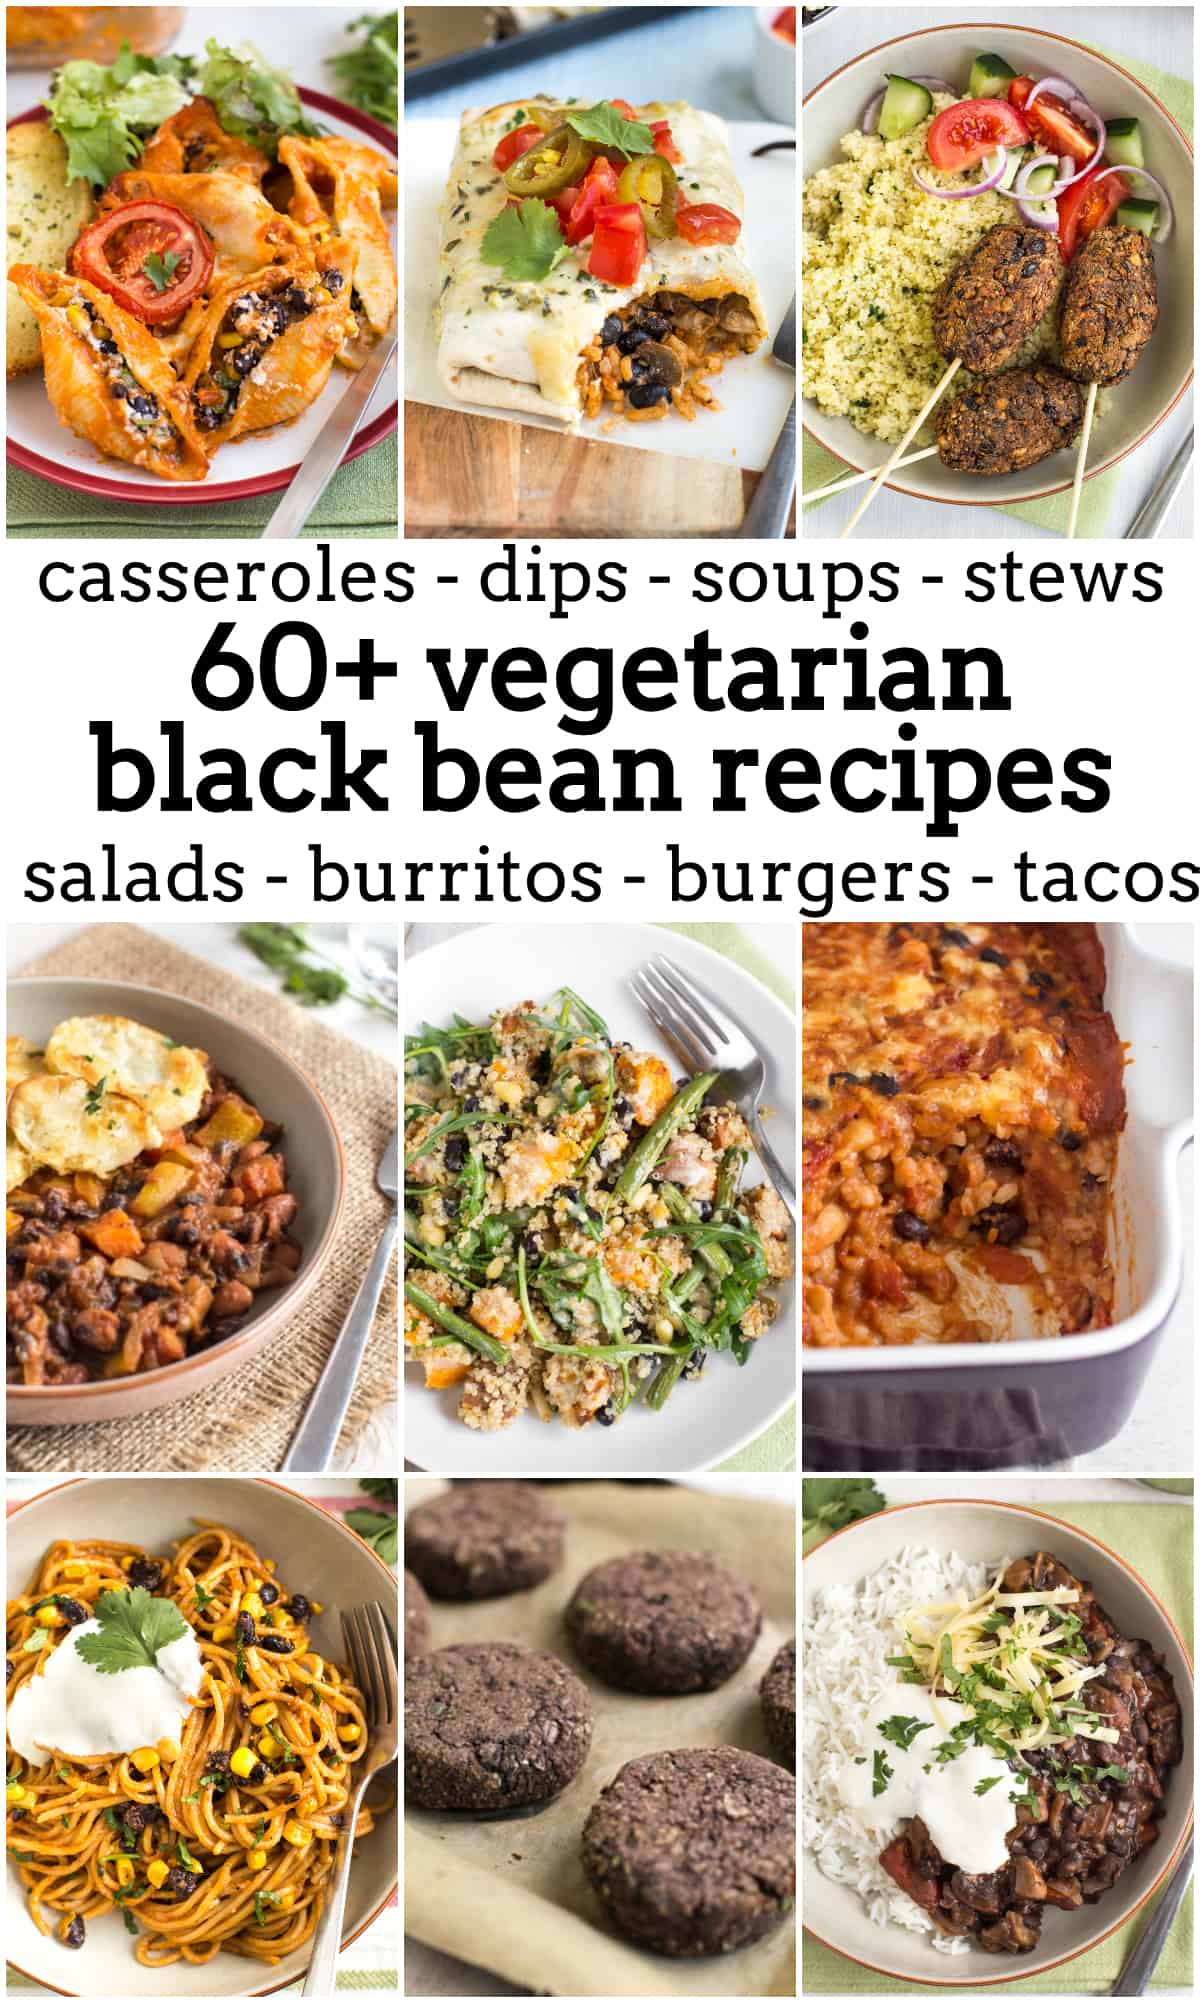 https://www.easycheesyvegetarian.com/wp-content/uploads/2013/10/60-vegetarian-black-bean-recipes-collage.jpg